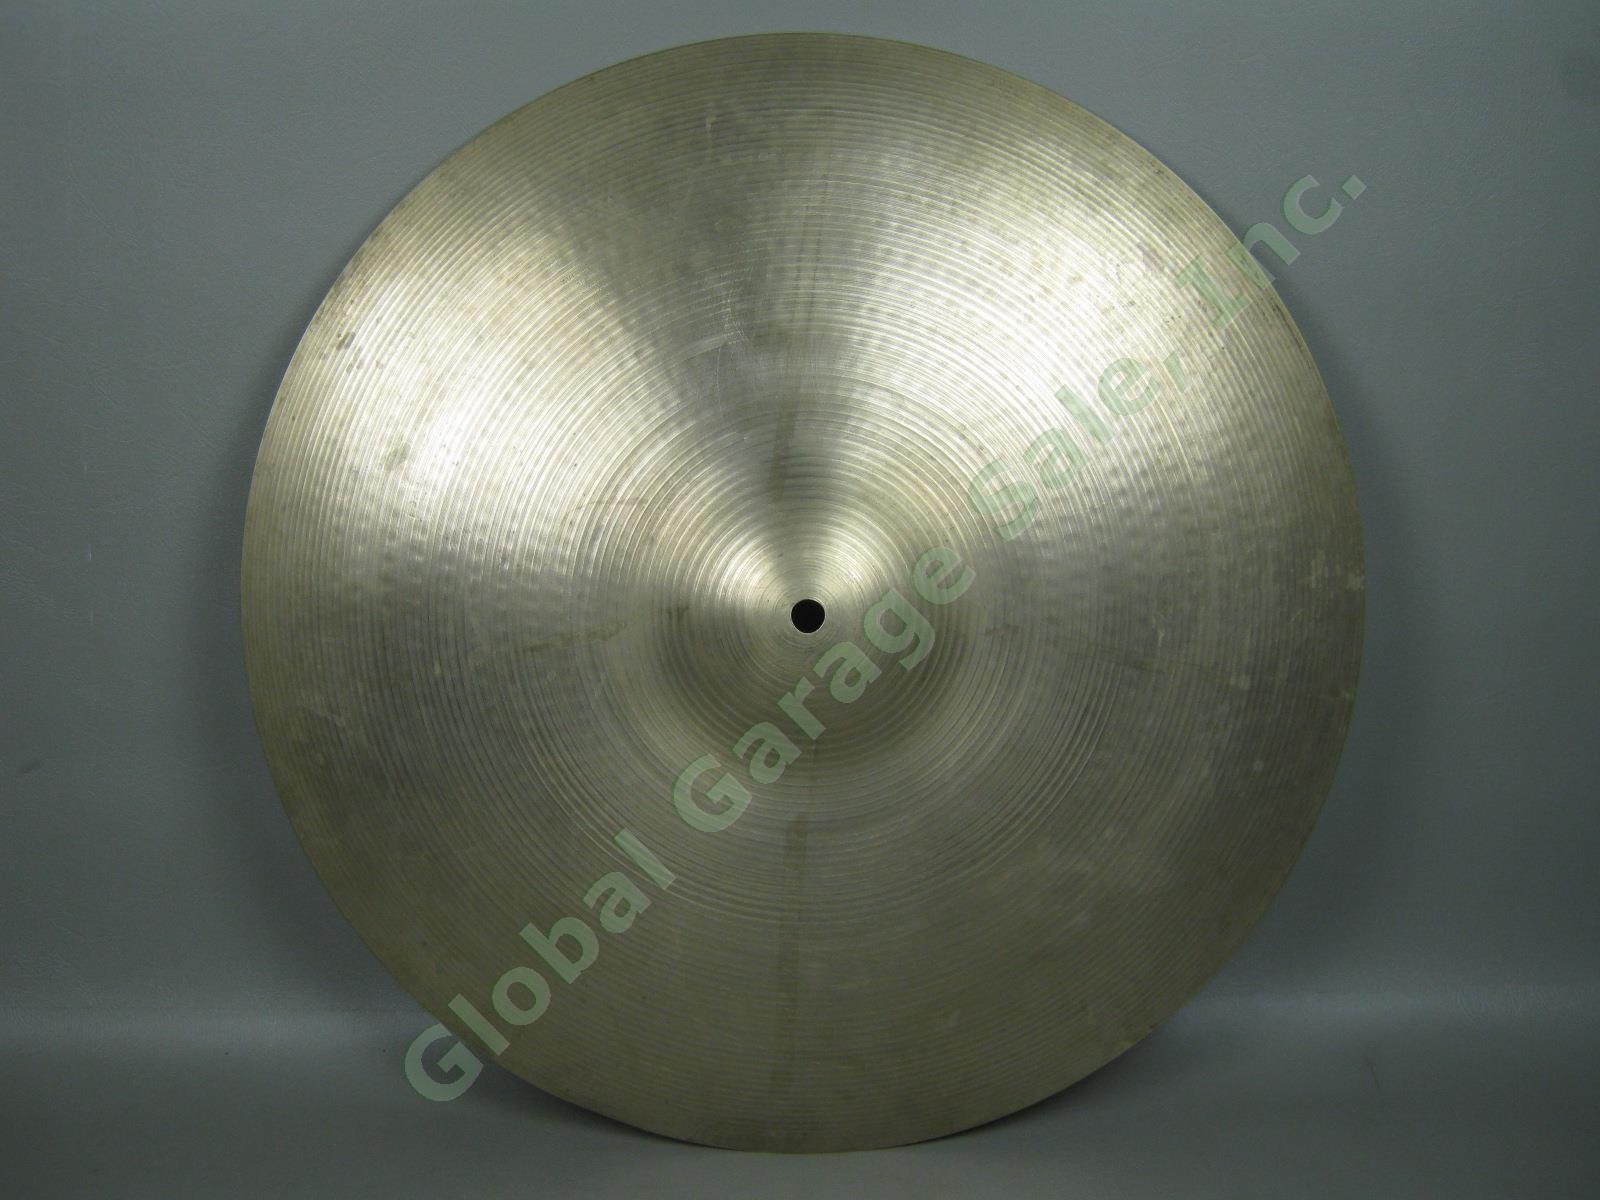 70s 18" Avedis Zildjian Genuine Turkish Crash Ride Cymbal Made In USA 1587 Grams